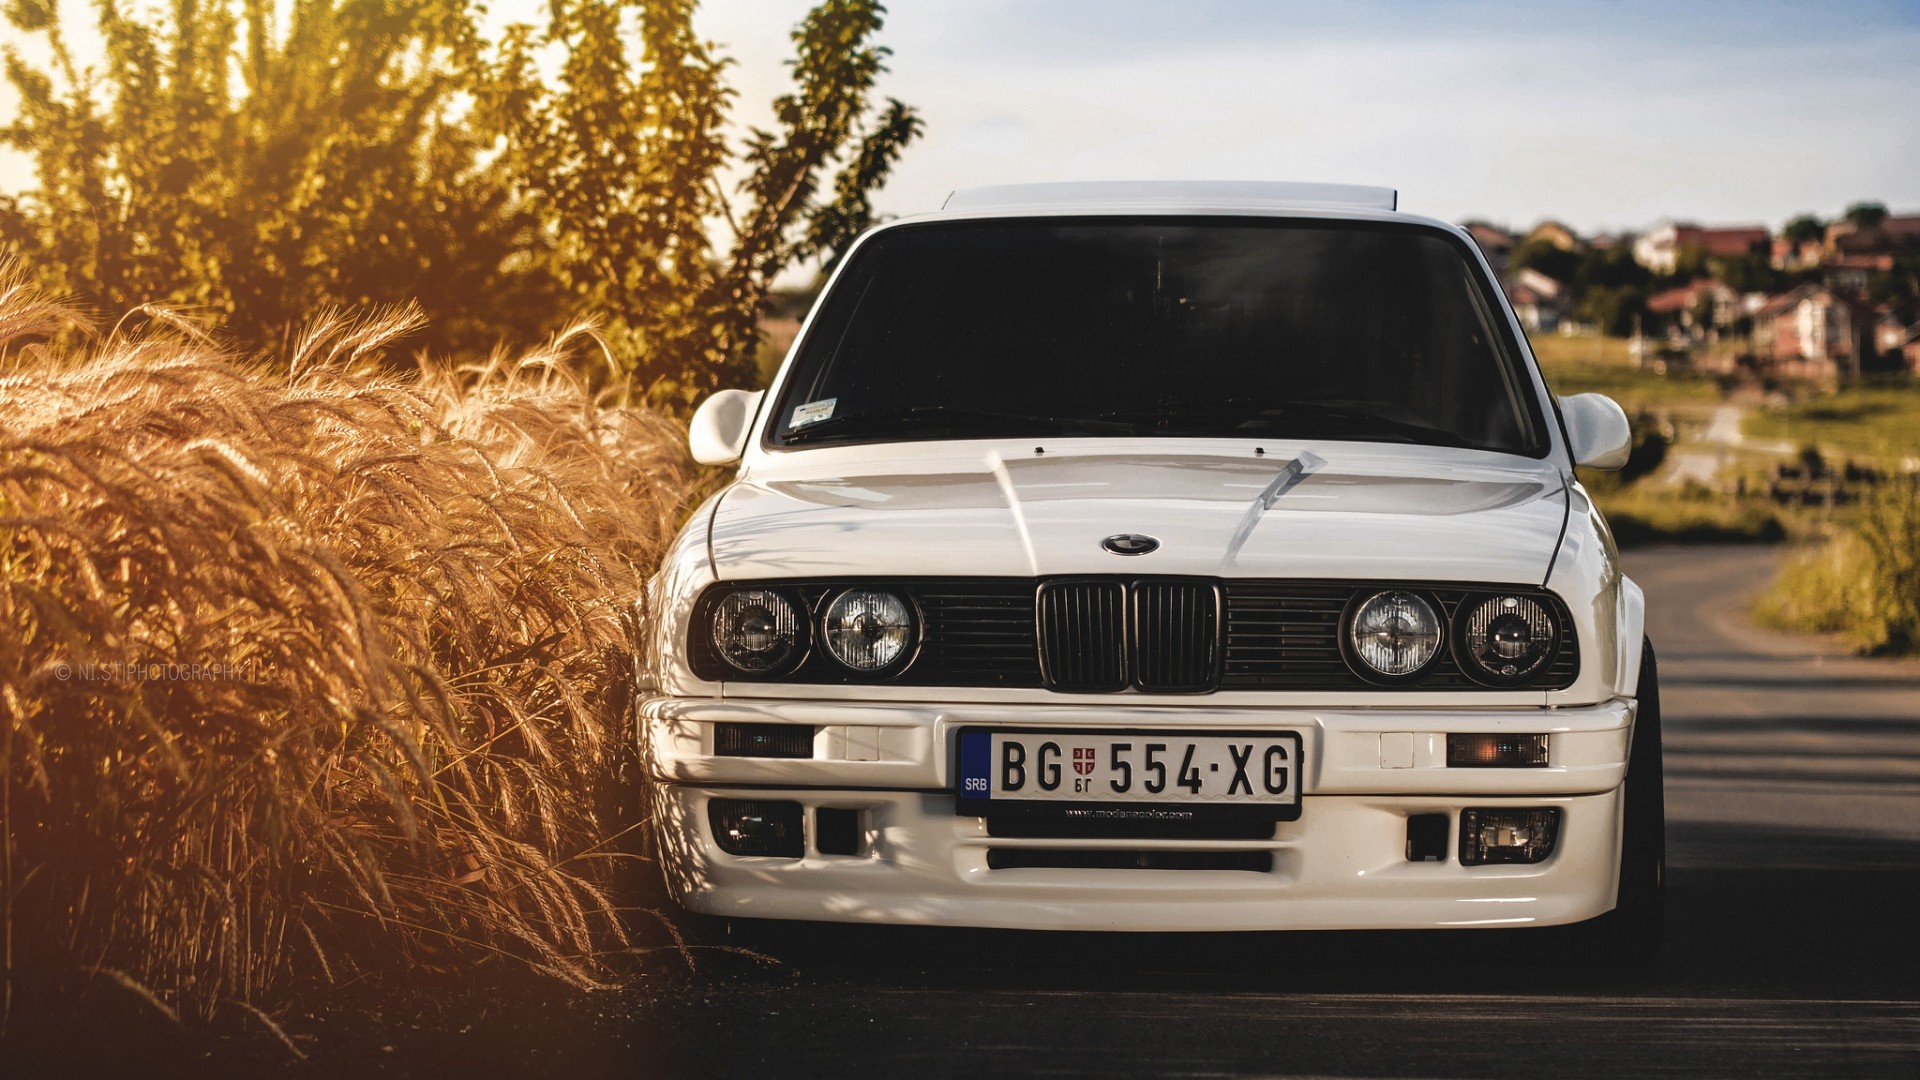 1920x1080 Pinterest Â· Download. Â« Old BMW Car Best Quality Wallpapers